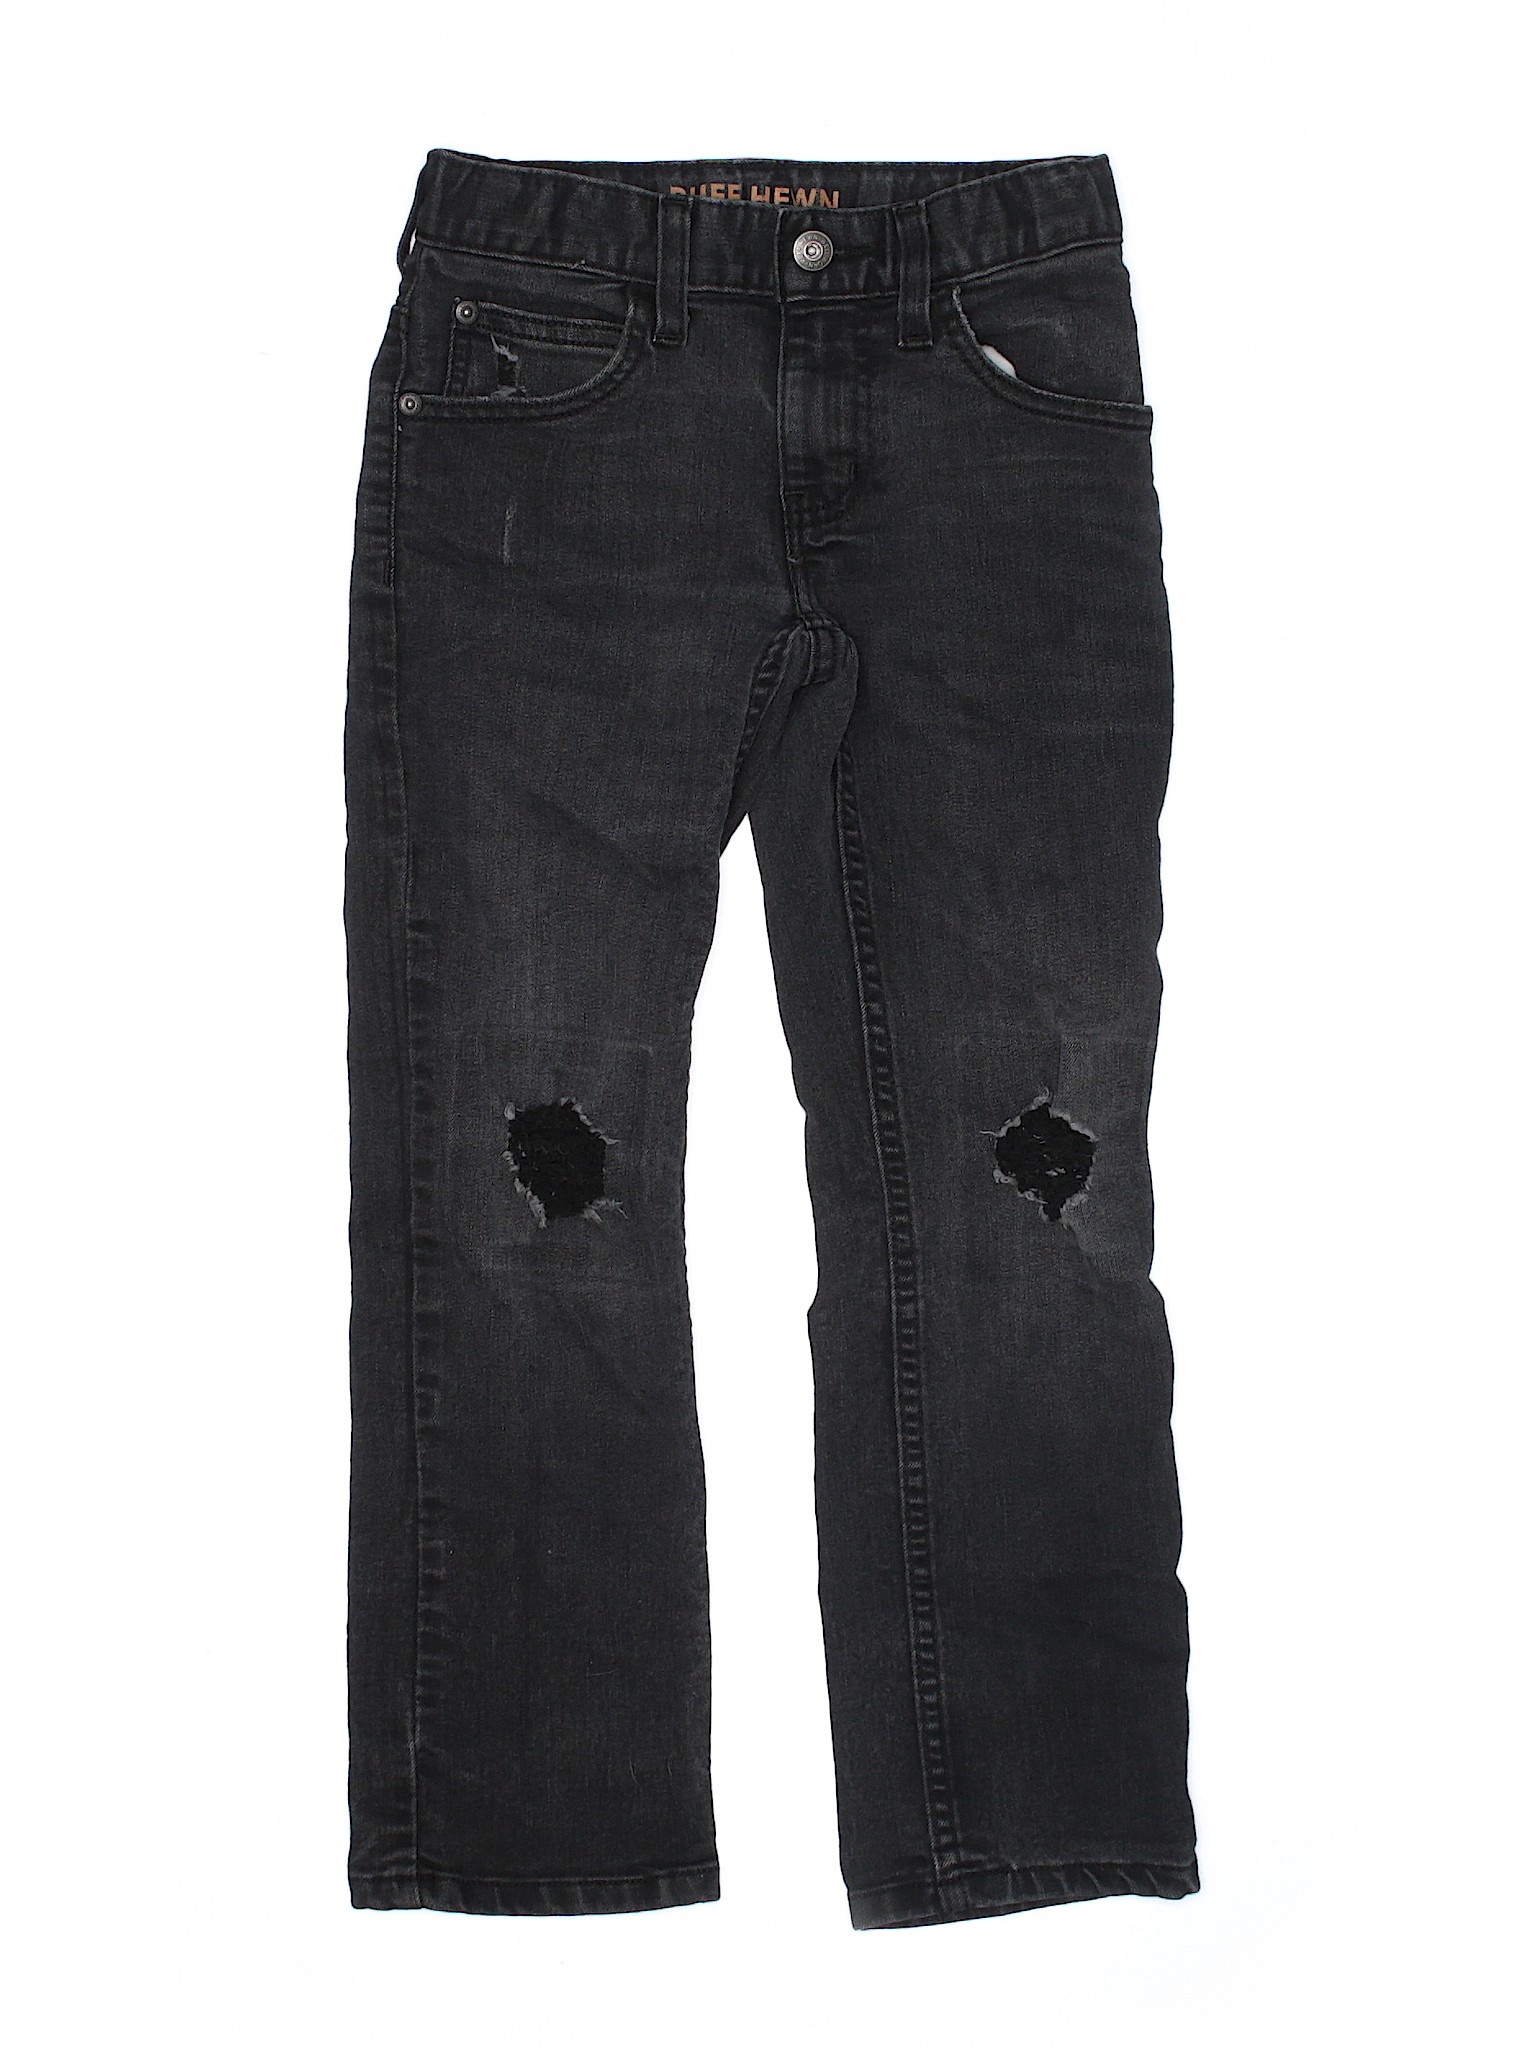 Ruff Hewn Boys Black Jeans 8 | eBay